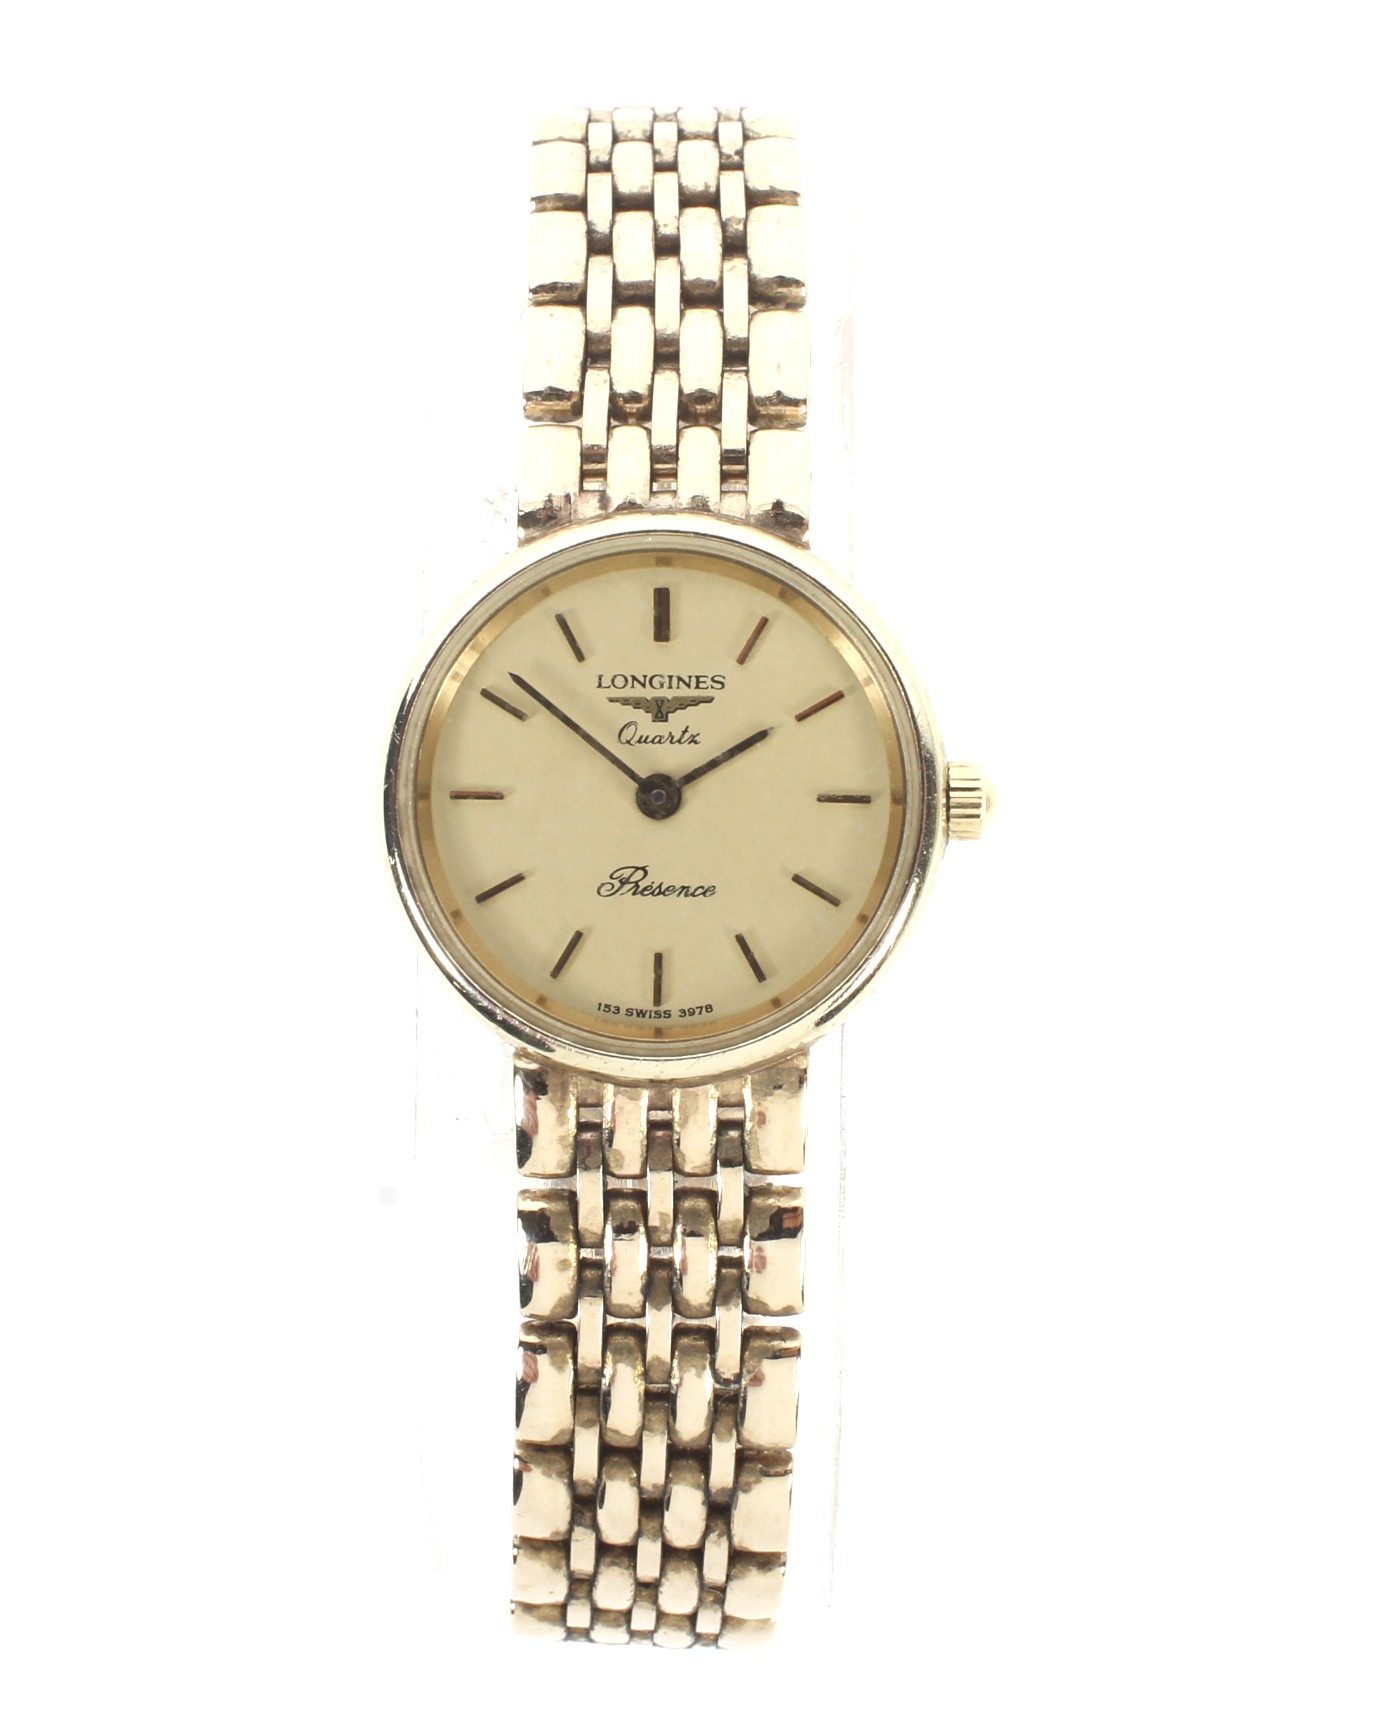 A Ladies 9ct gold Longines wristwatch with original gate bracelet hallmarked 375 with original box - Image 2 of 4